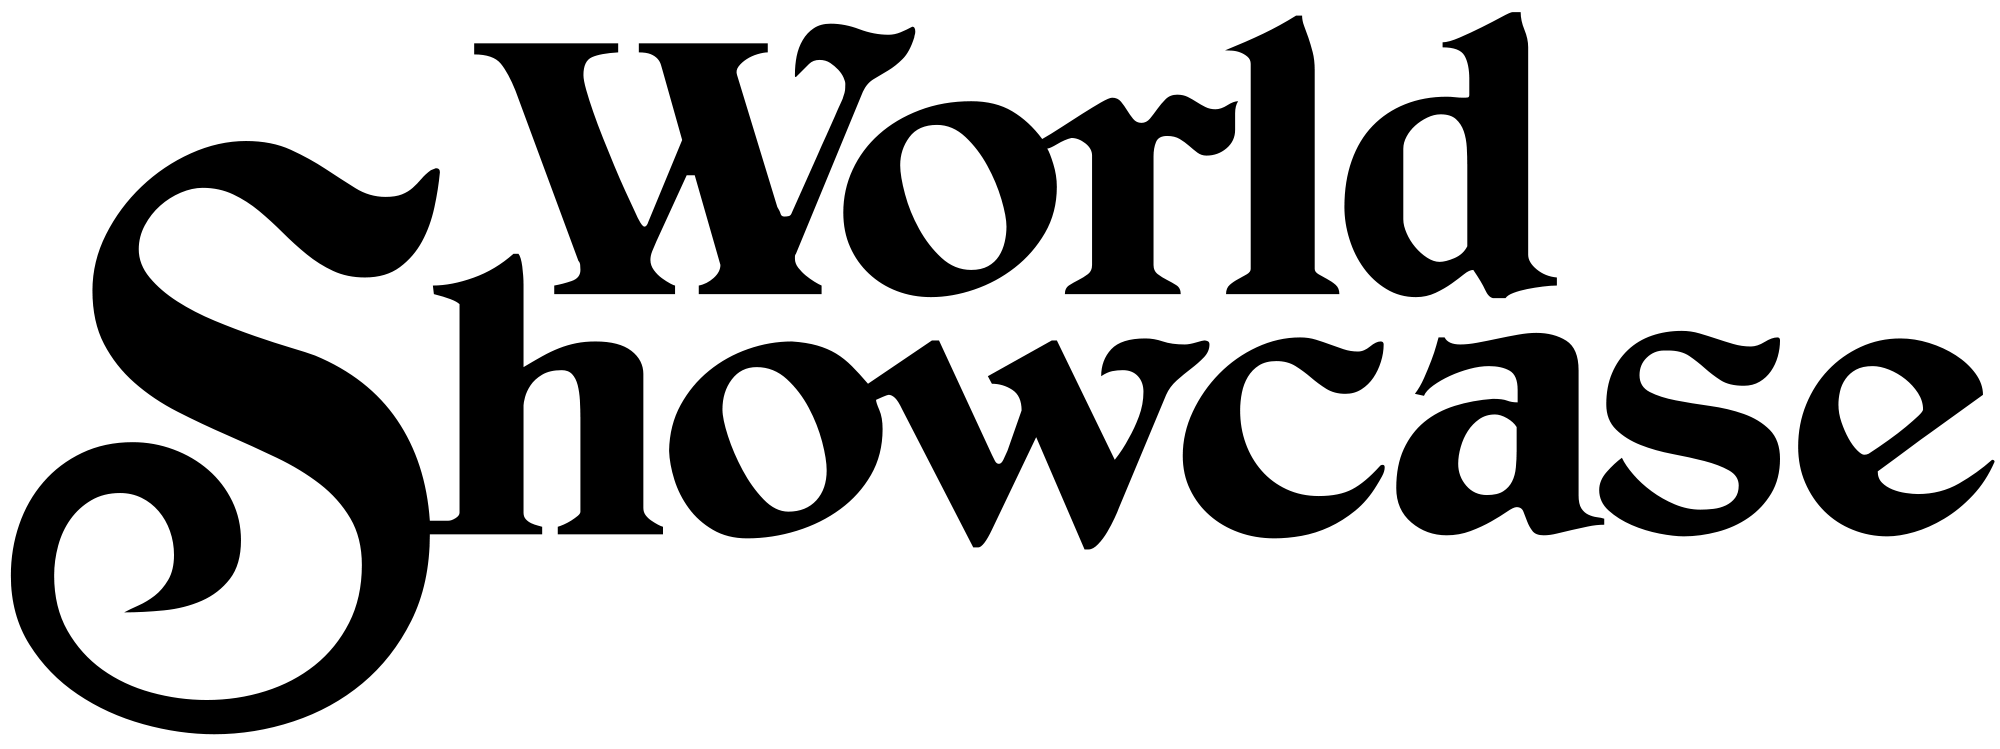 Disney Epcot Logo - Epcot World Showcase Logo.svg